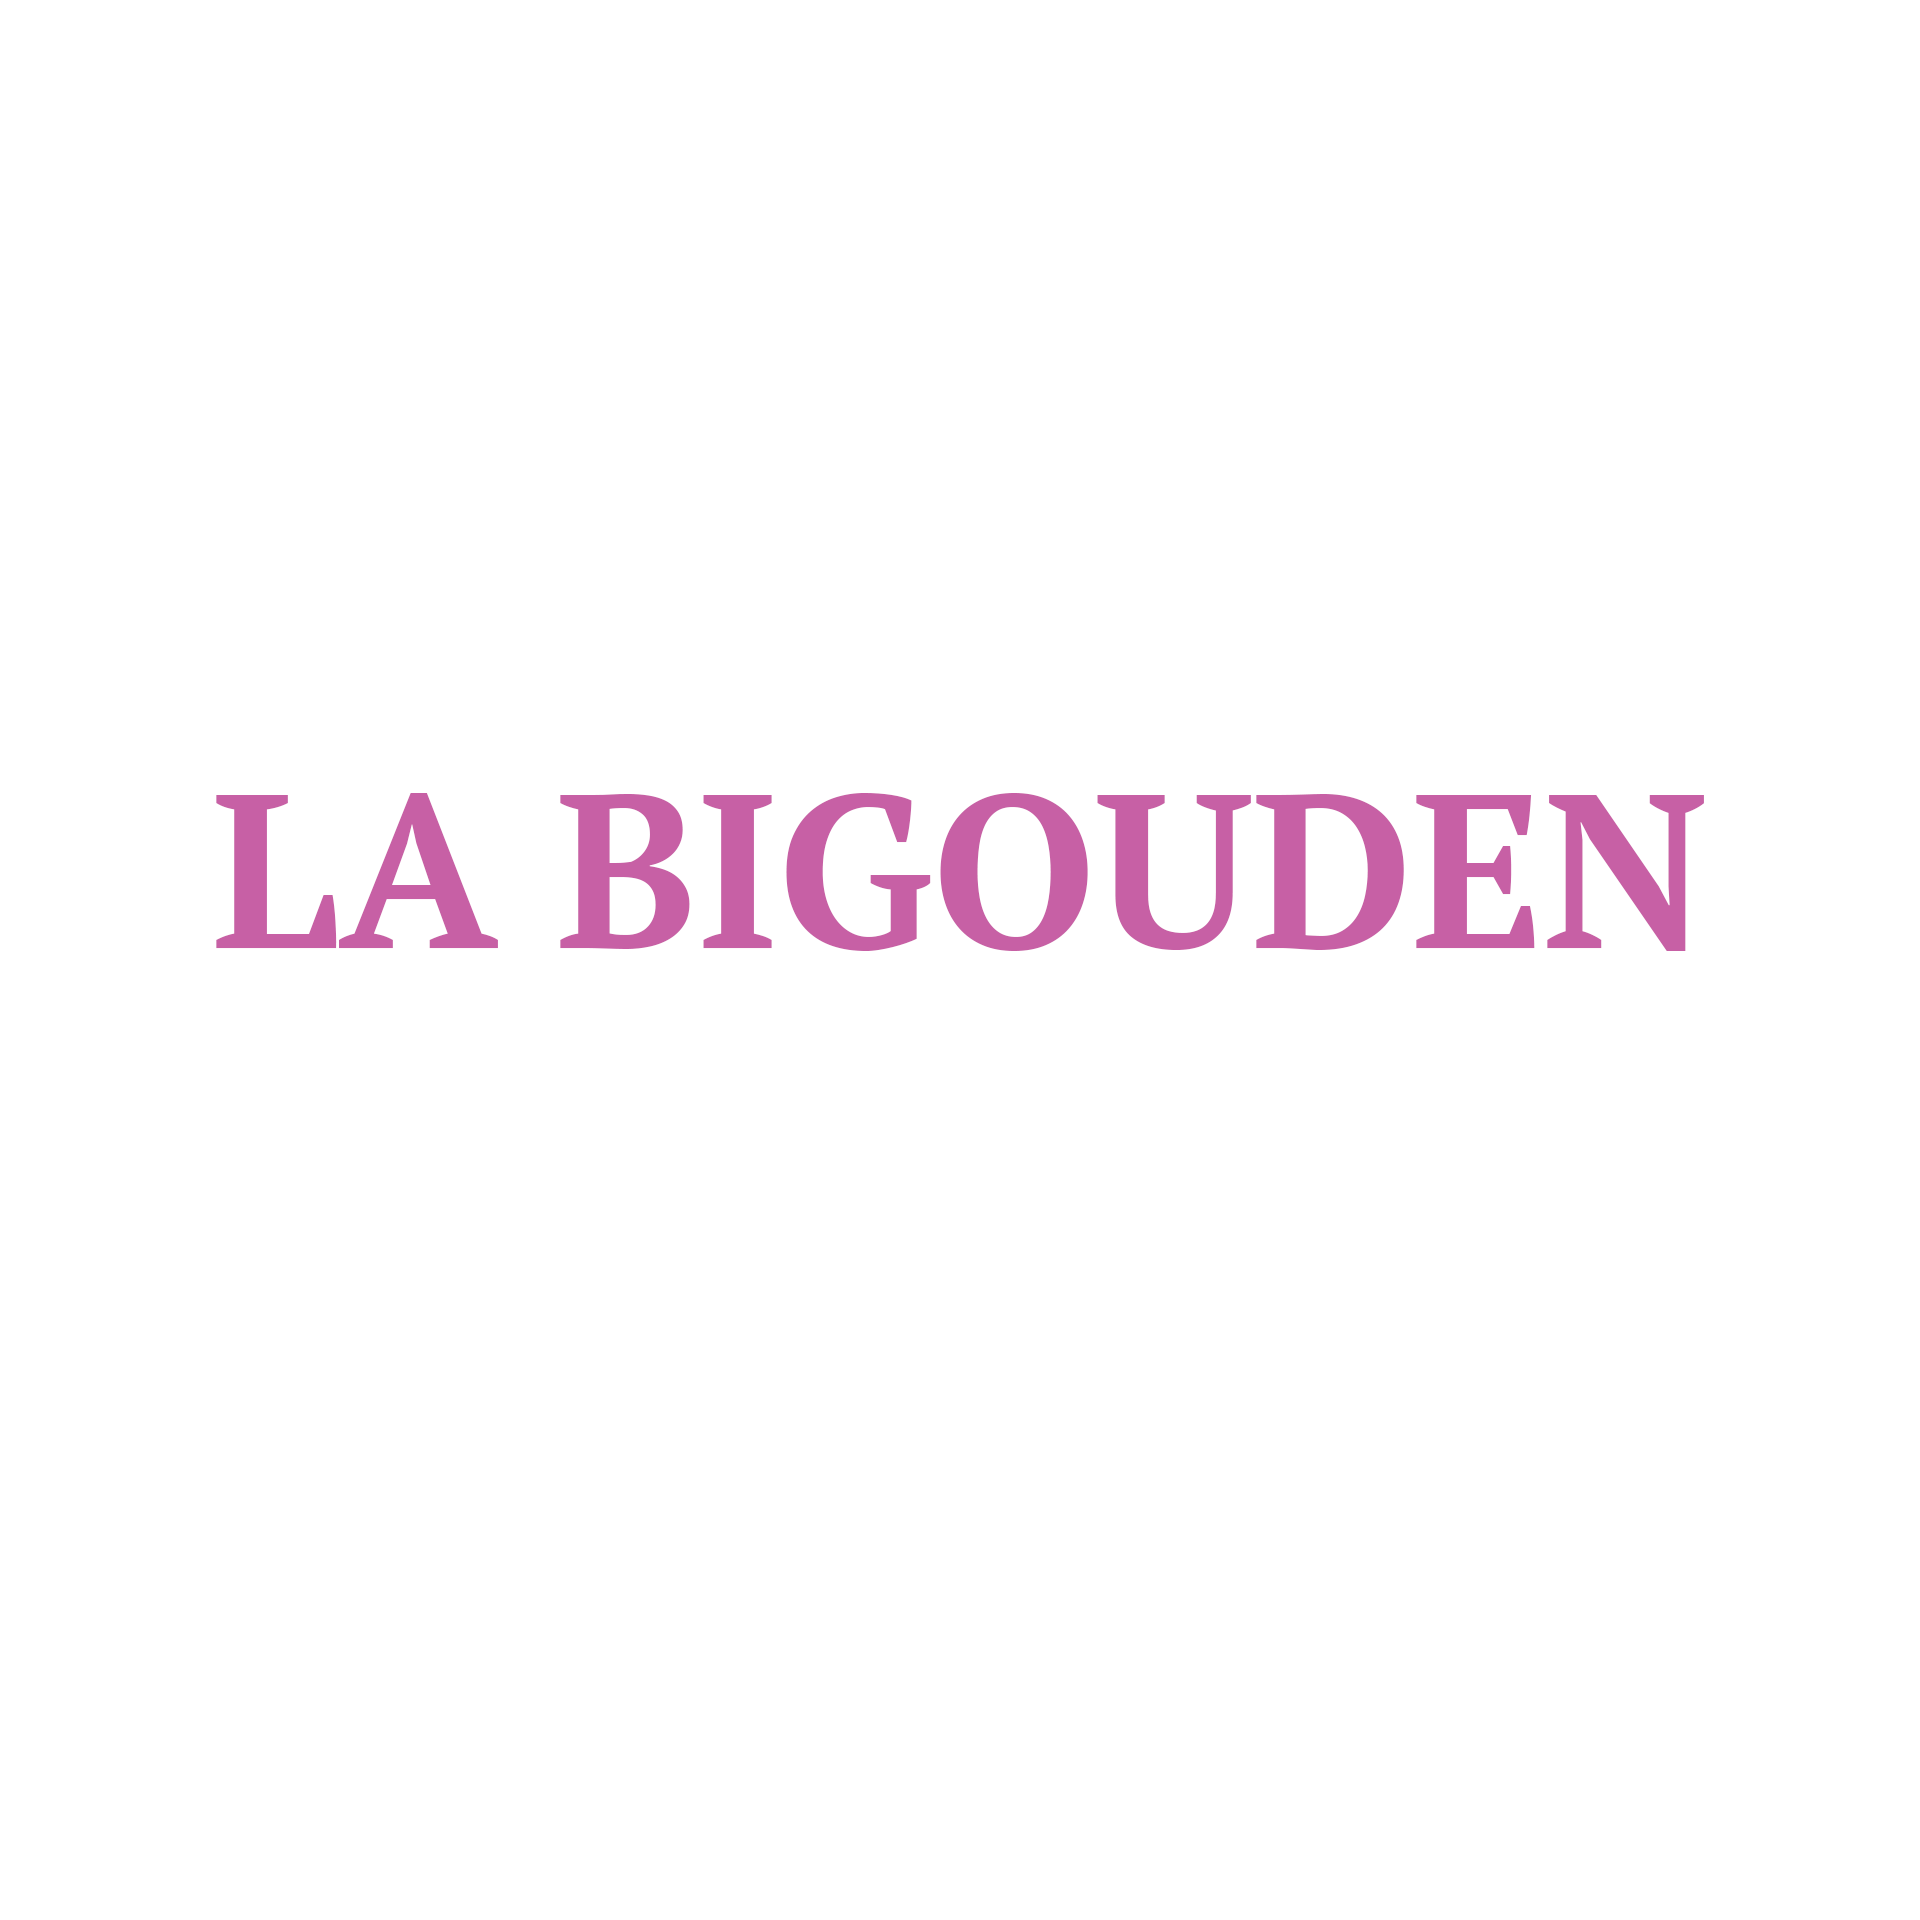 La Bigouden